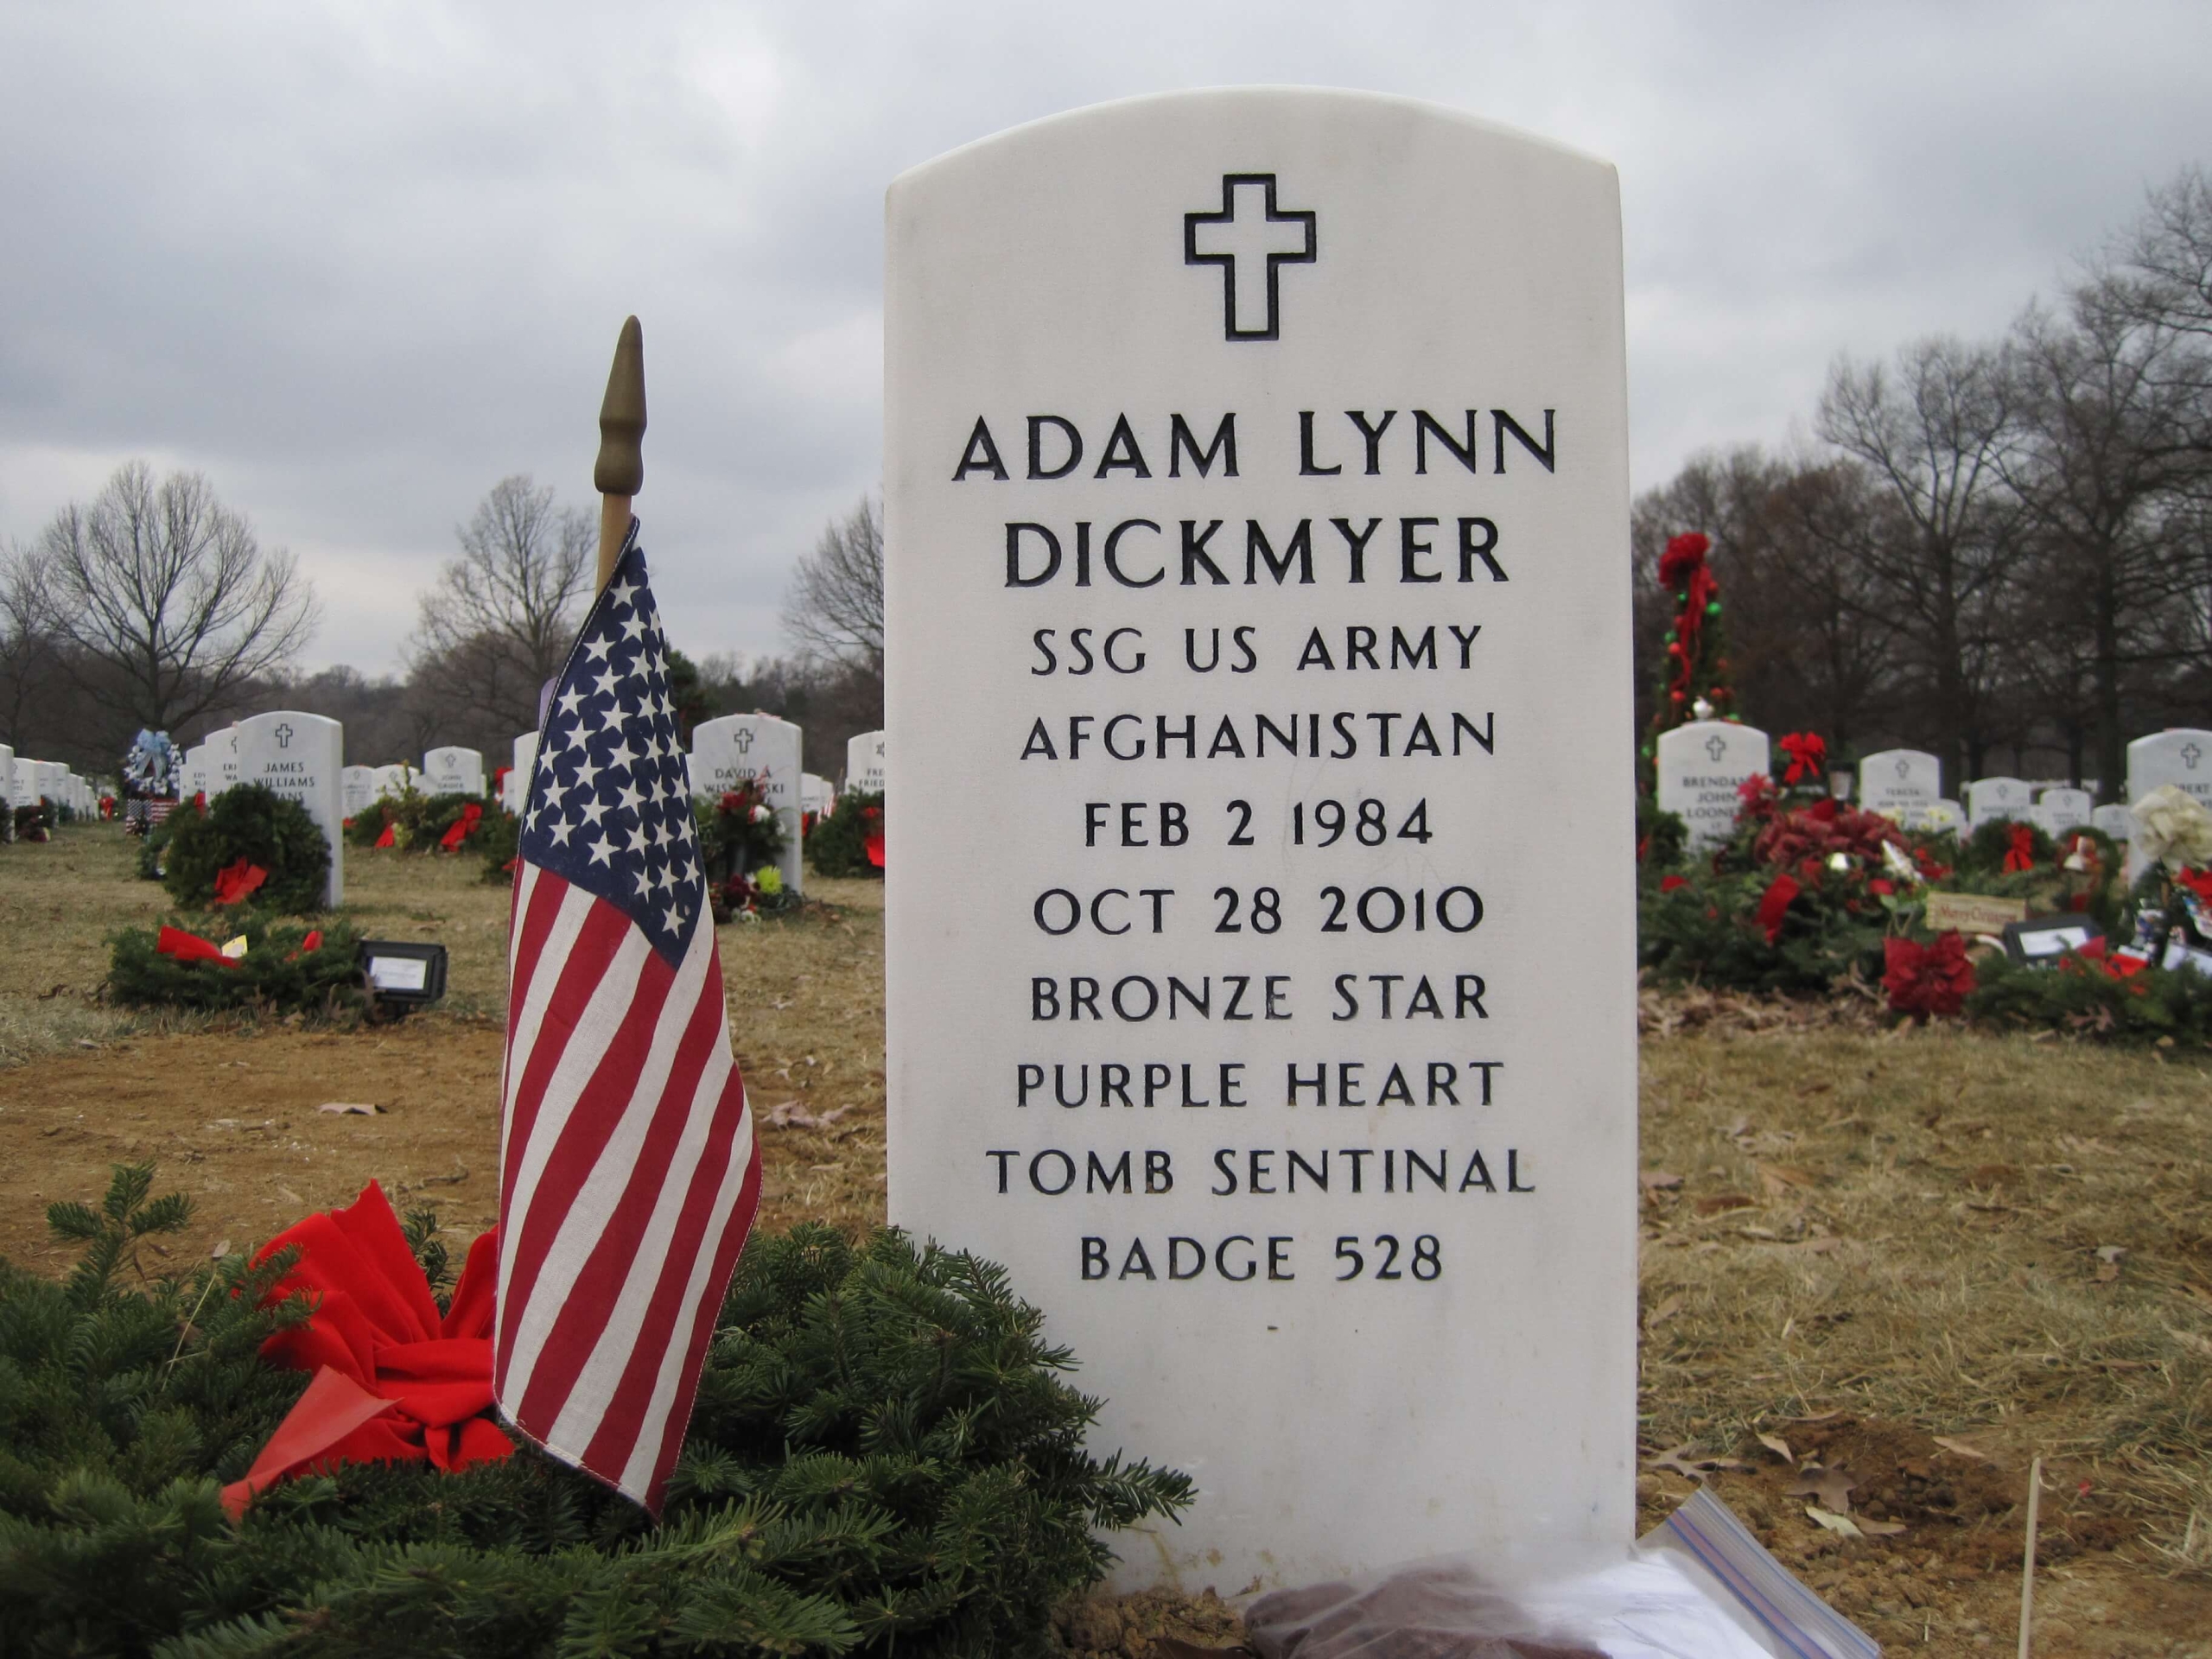 aldickmyer-gravesite-photo-by-eileen-horan-december-2010-004